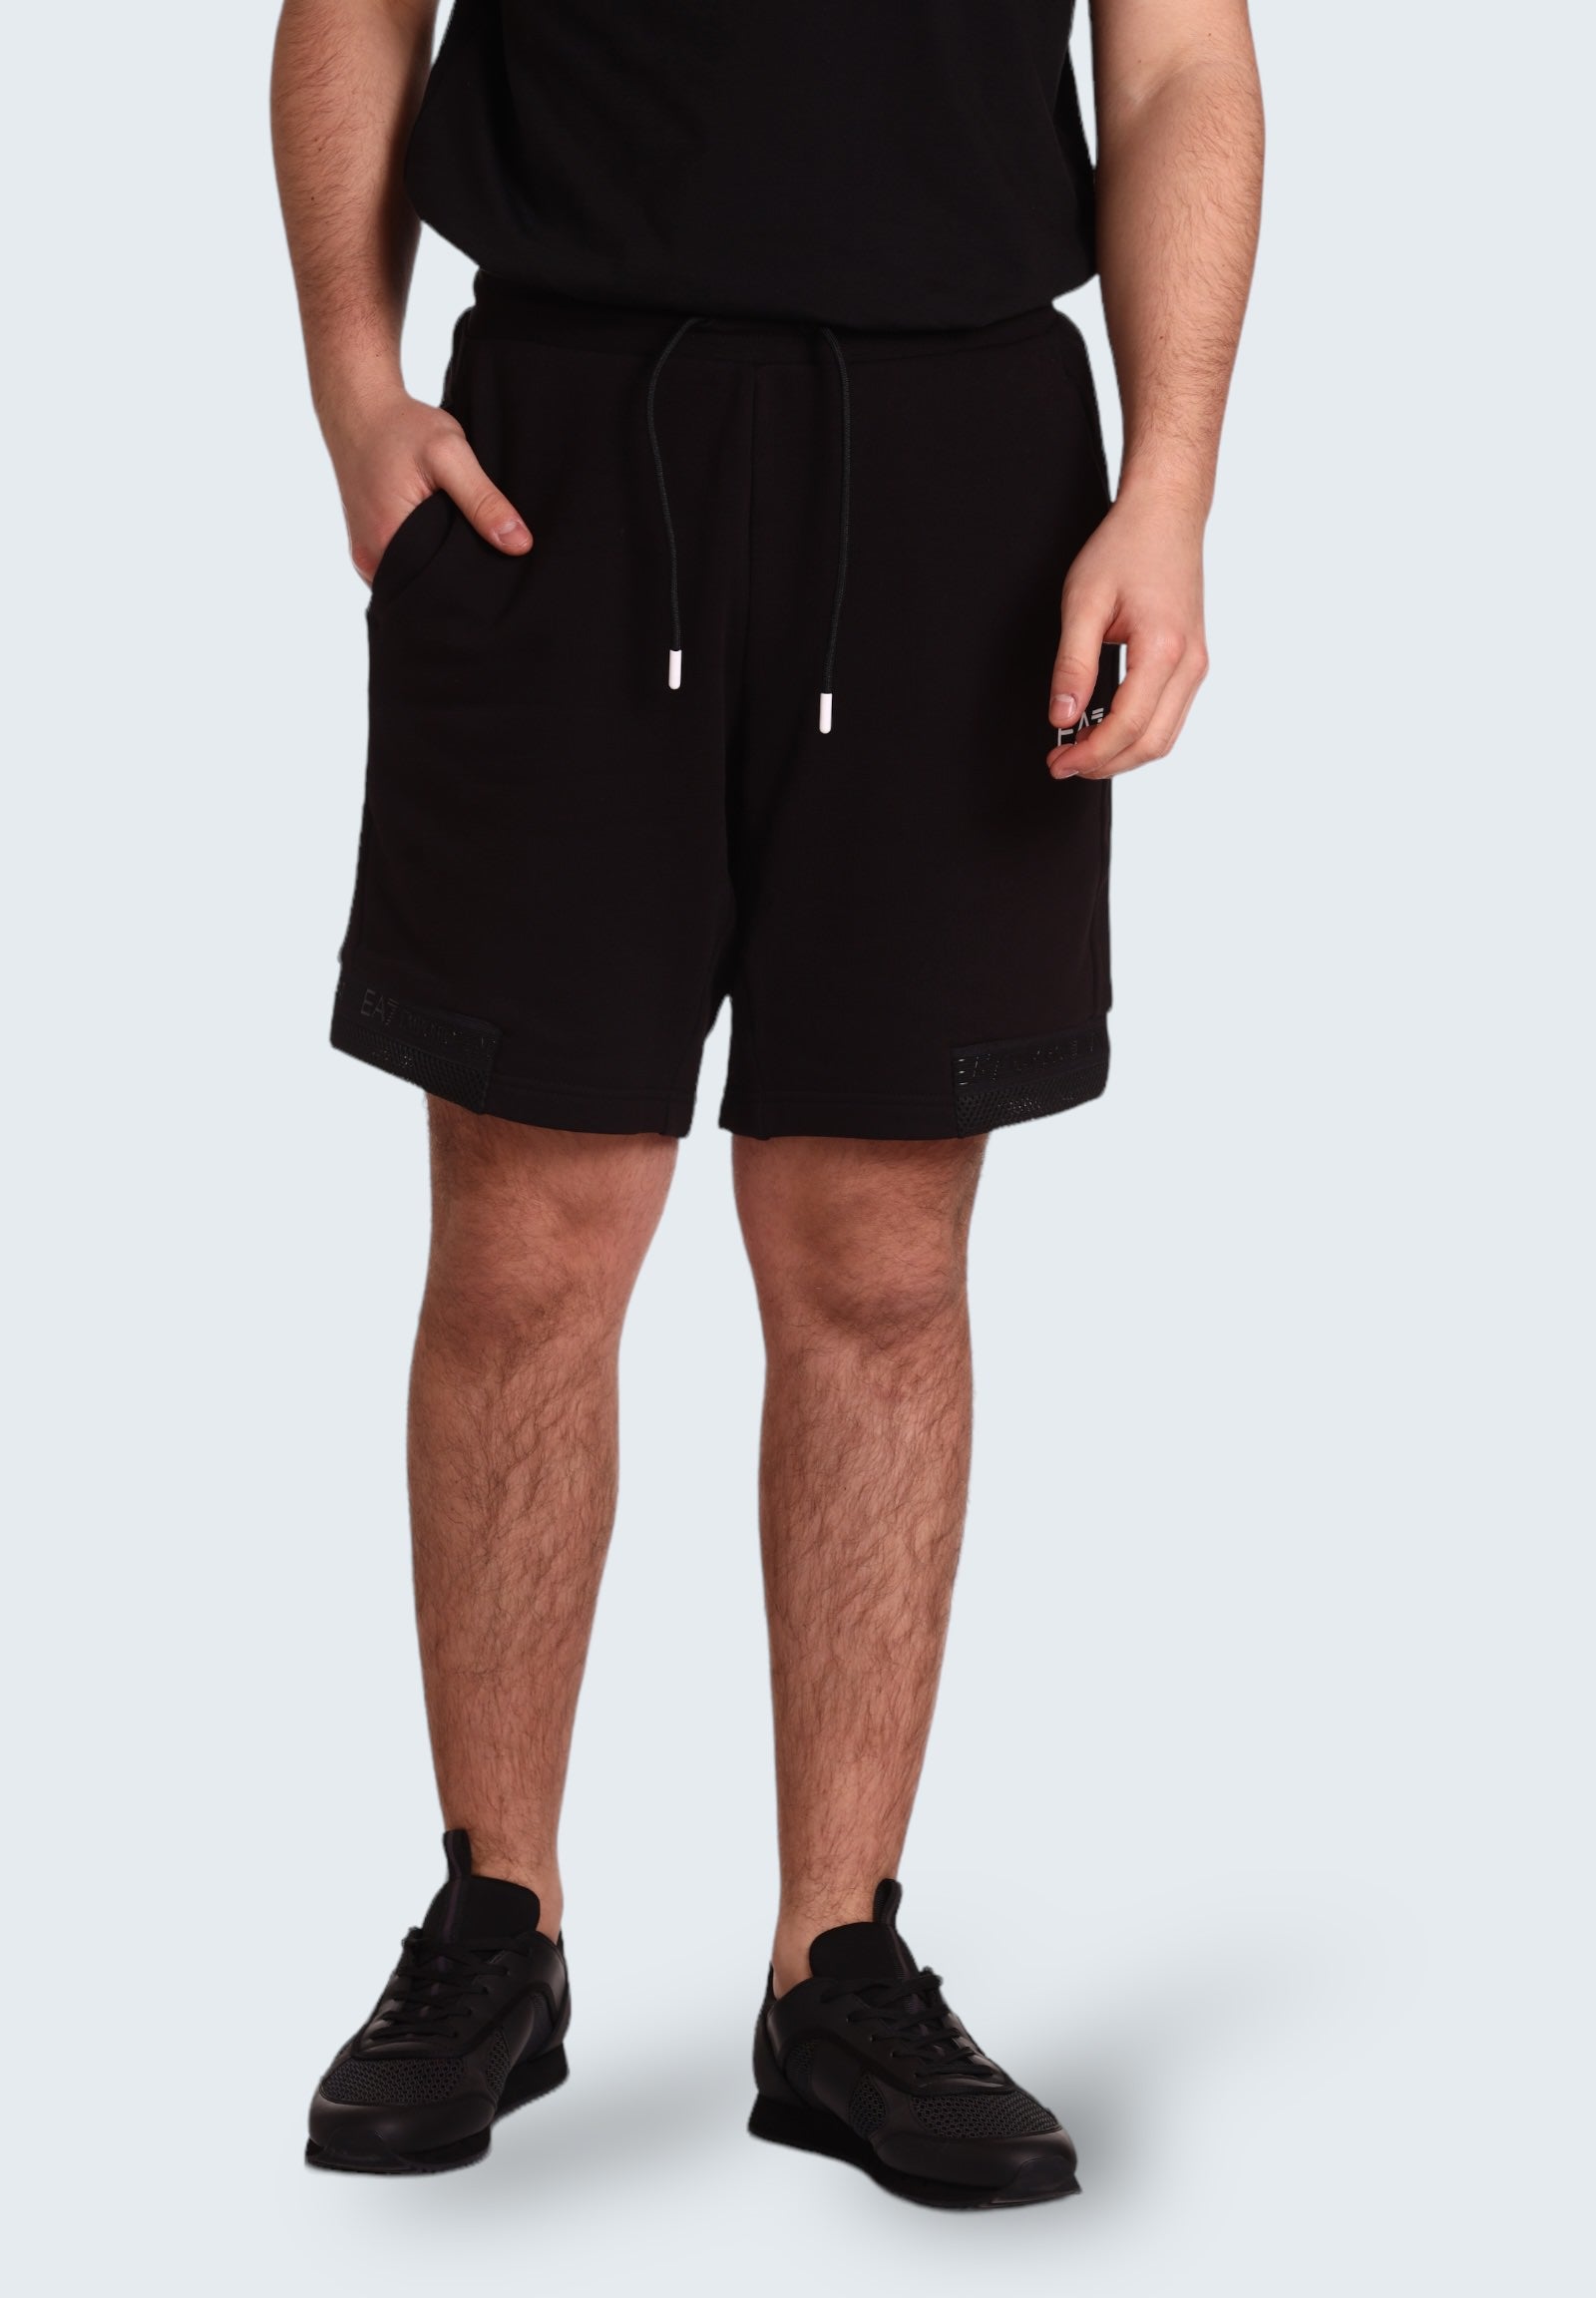 Bermuda shorts 3dps73 Black